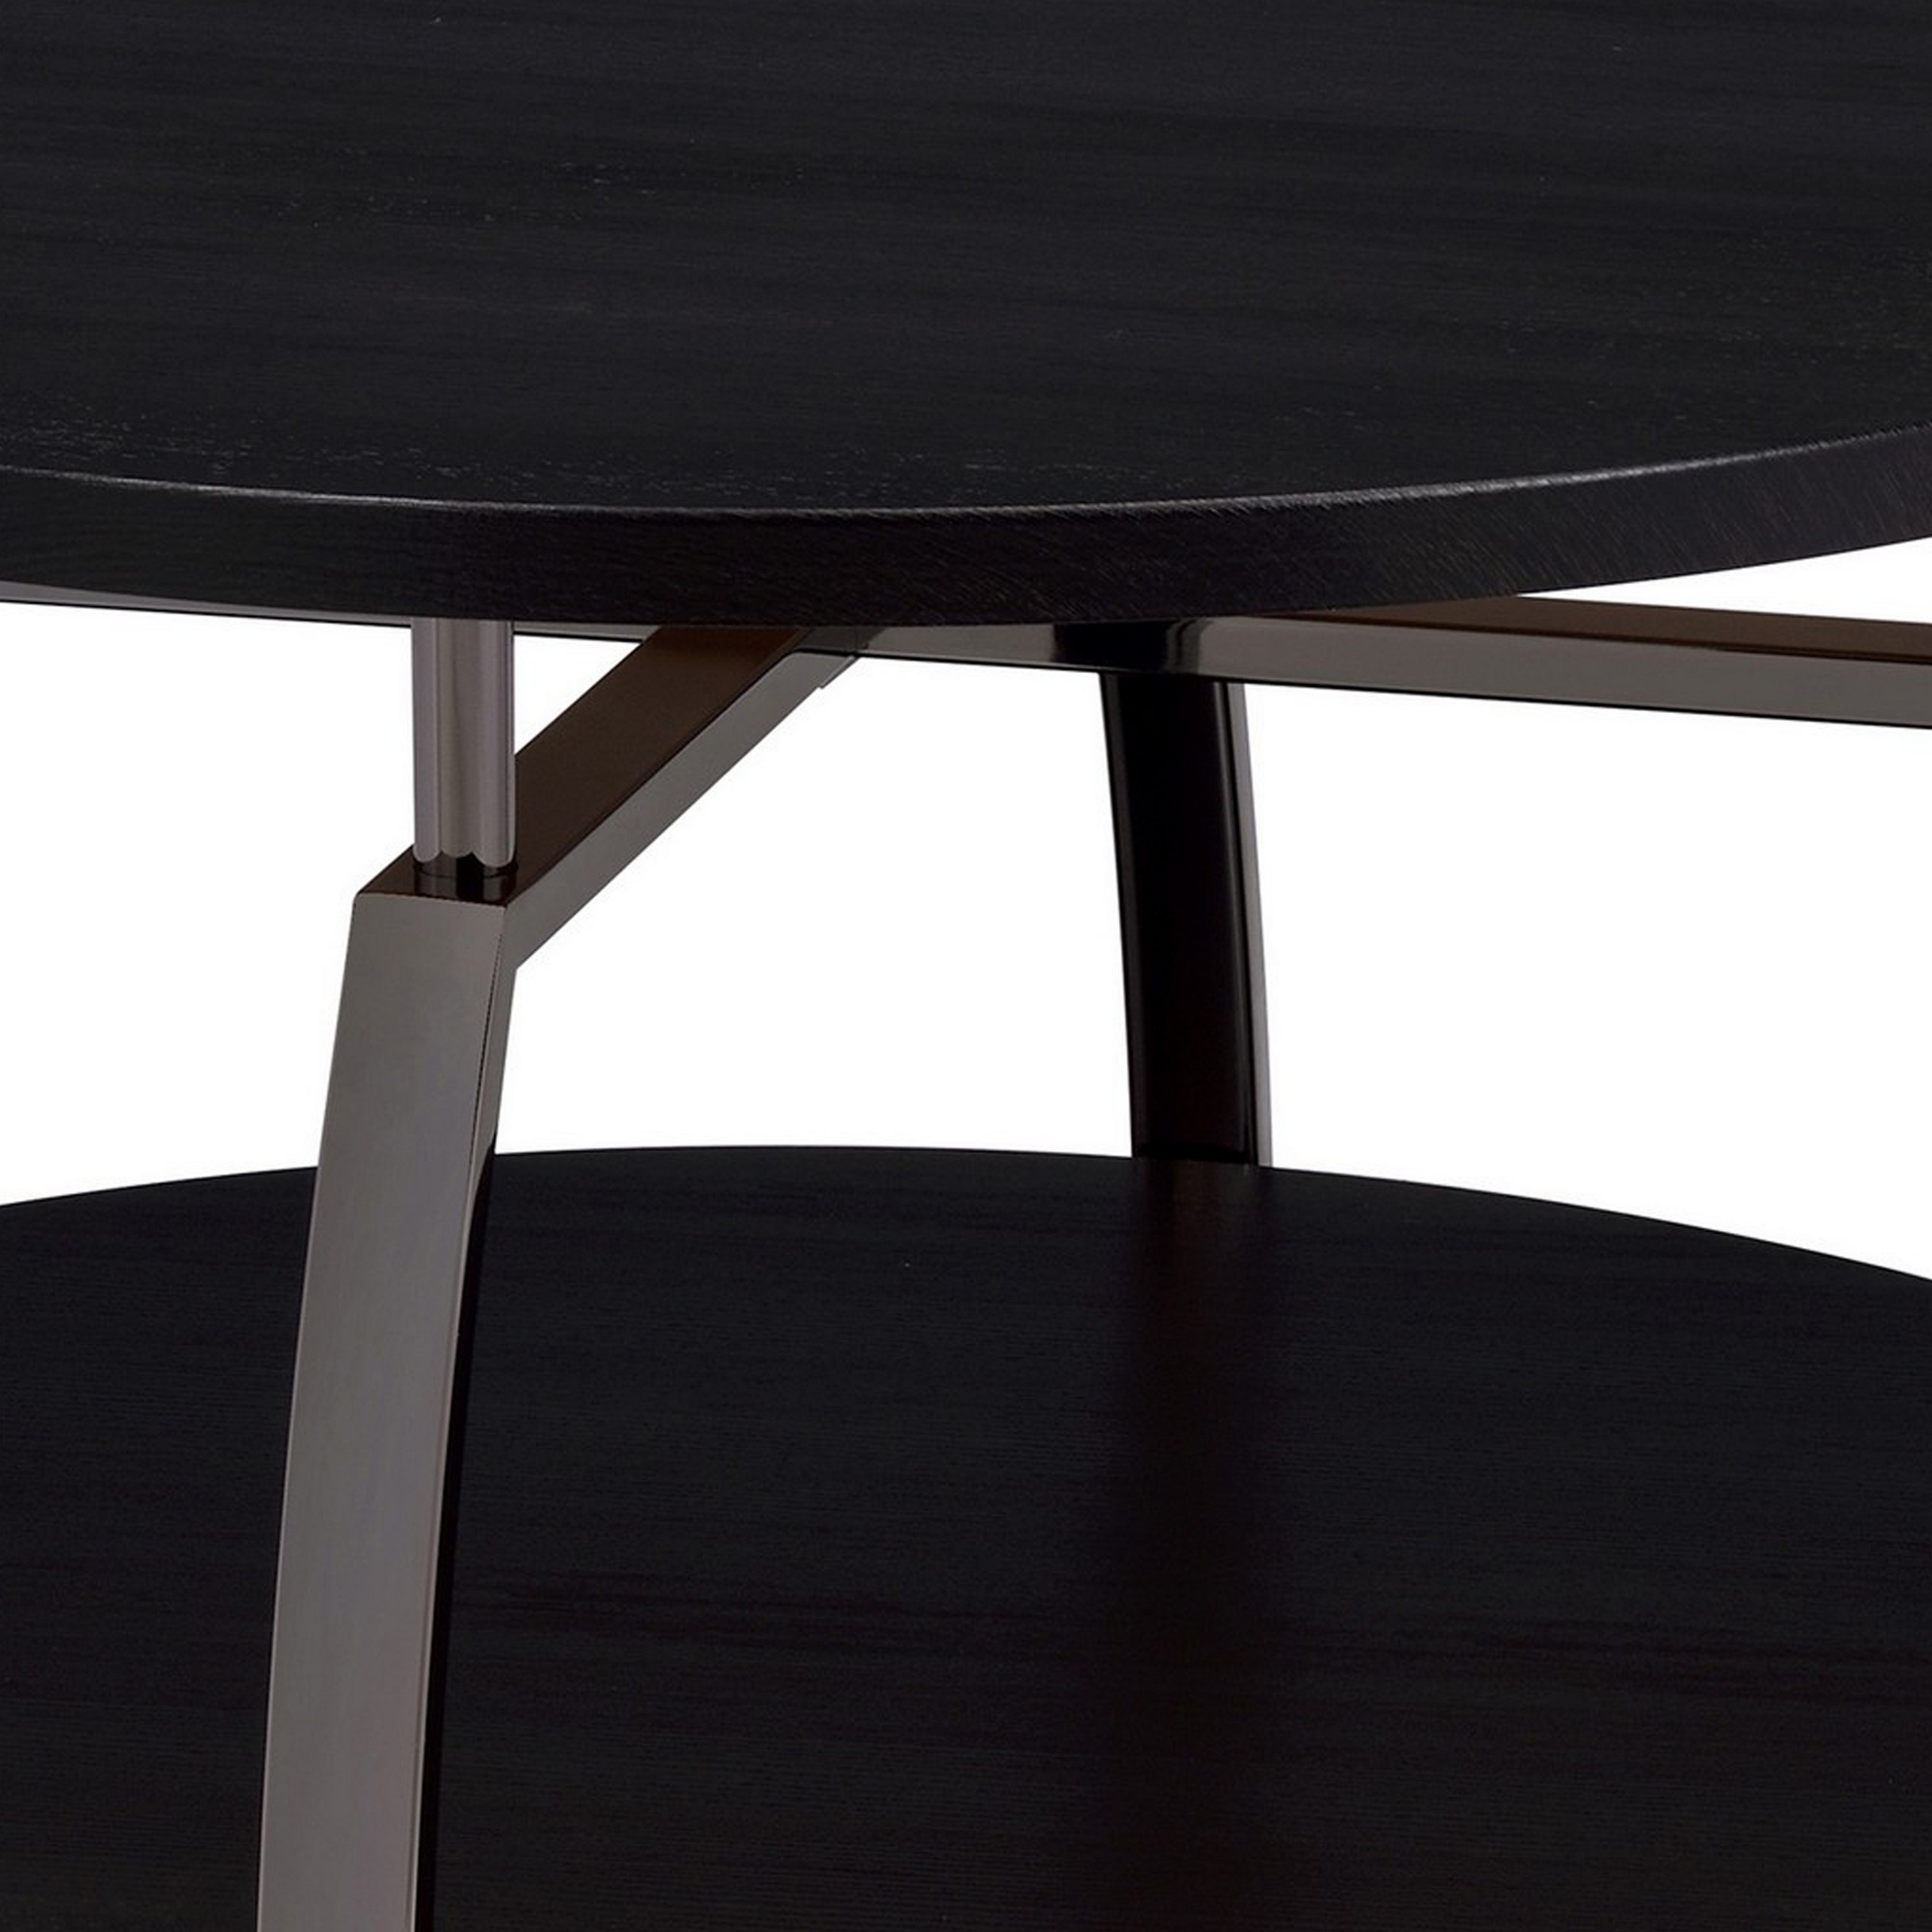 Dyn 35 Inch Round Coffee Table, 1 Shelf, Grayish Black Top, Gray Metal Leg- Saltoro Sherpi